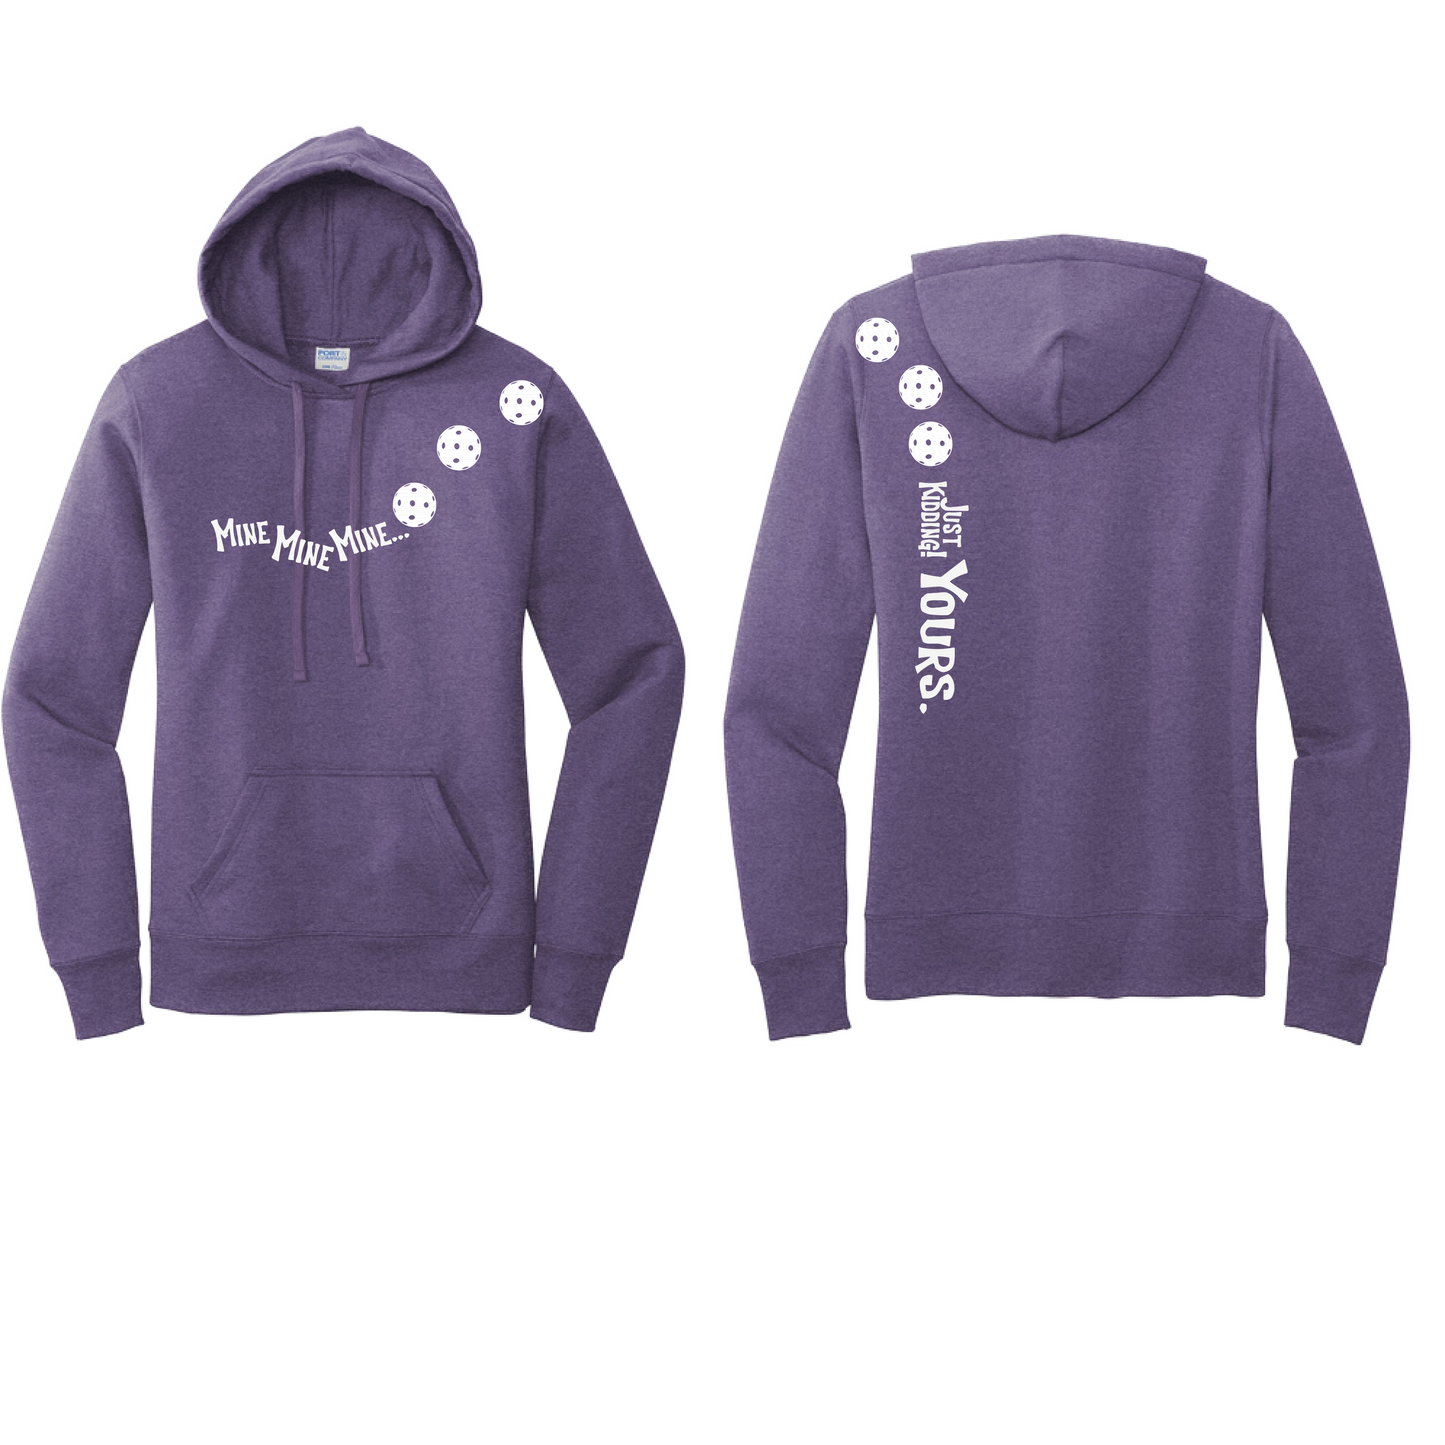 Mine JK Yours (Pickleballs Patriotic Stars White Purple)| Women’s Fitted Hoodie Pickleball Sweatshirt | 50% Cotton 50% Poly Fleece